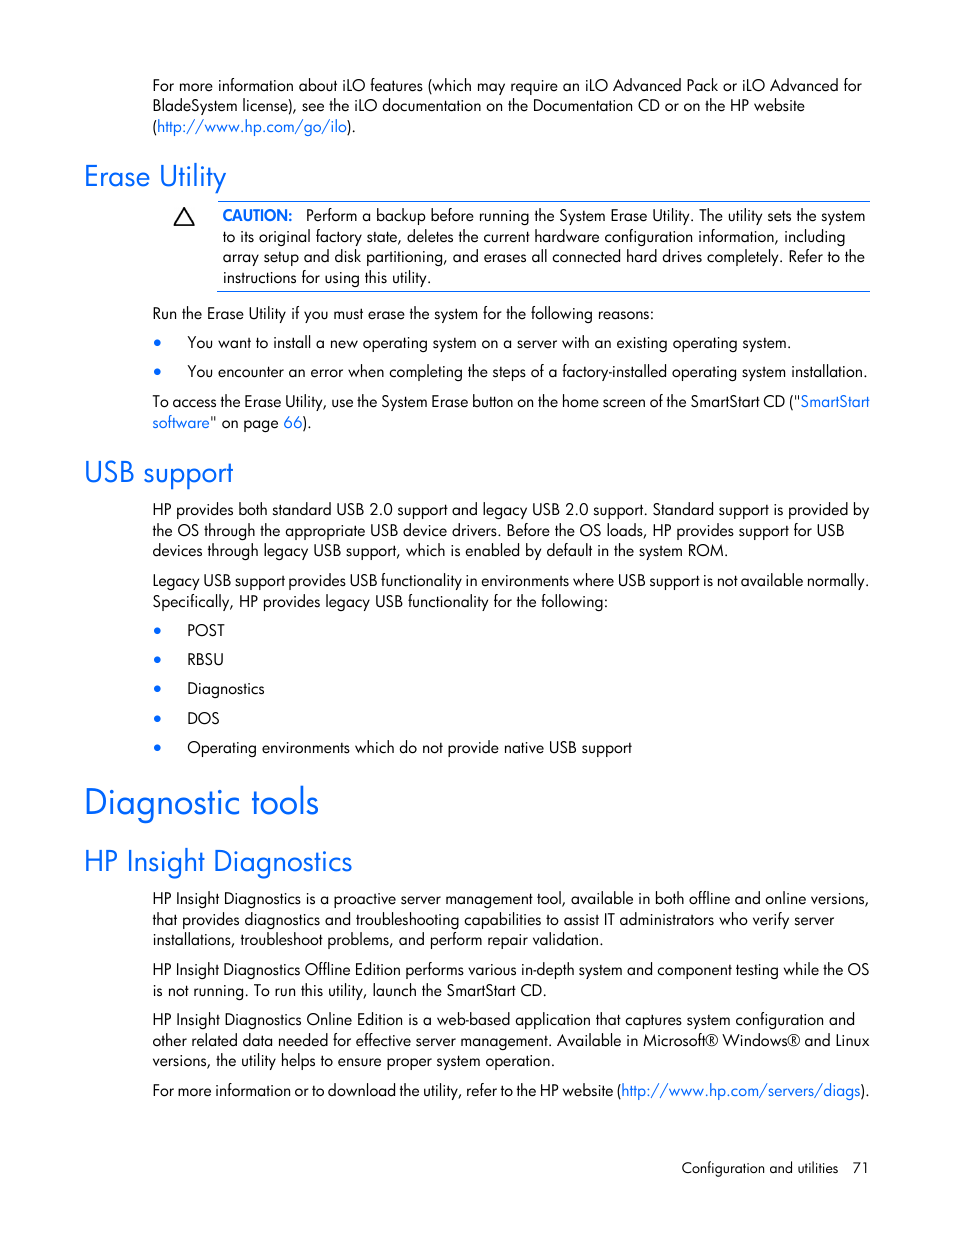 Erase utility, Usb support, Diagnostic tools | HP ProLiant ML110 G7 Server  User Manual | Page 71 / 113 | Original mode